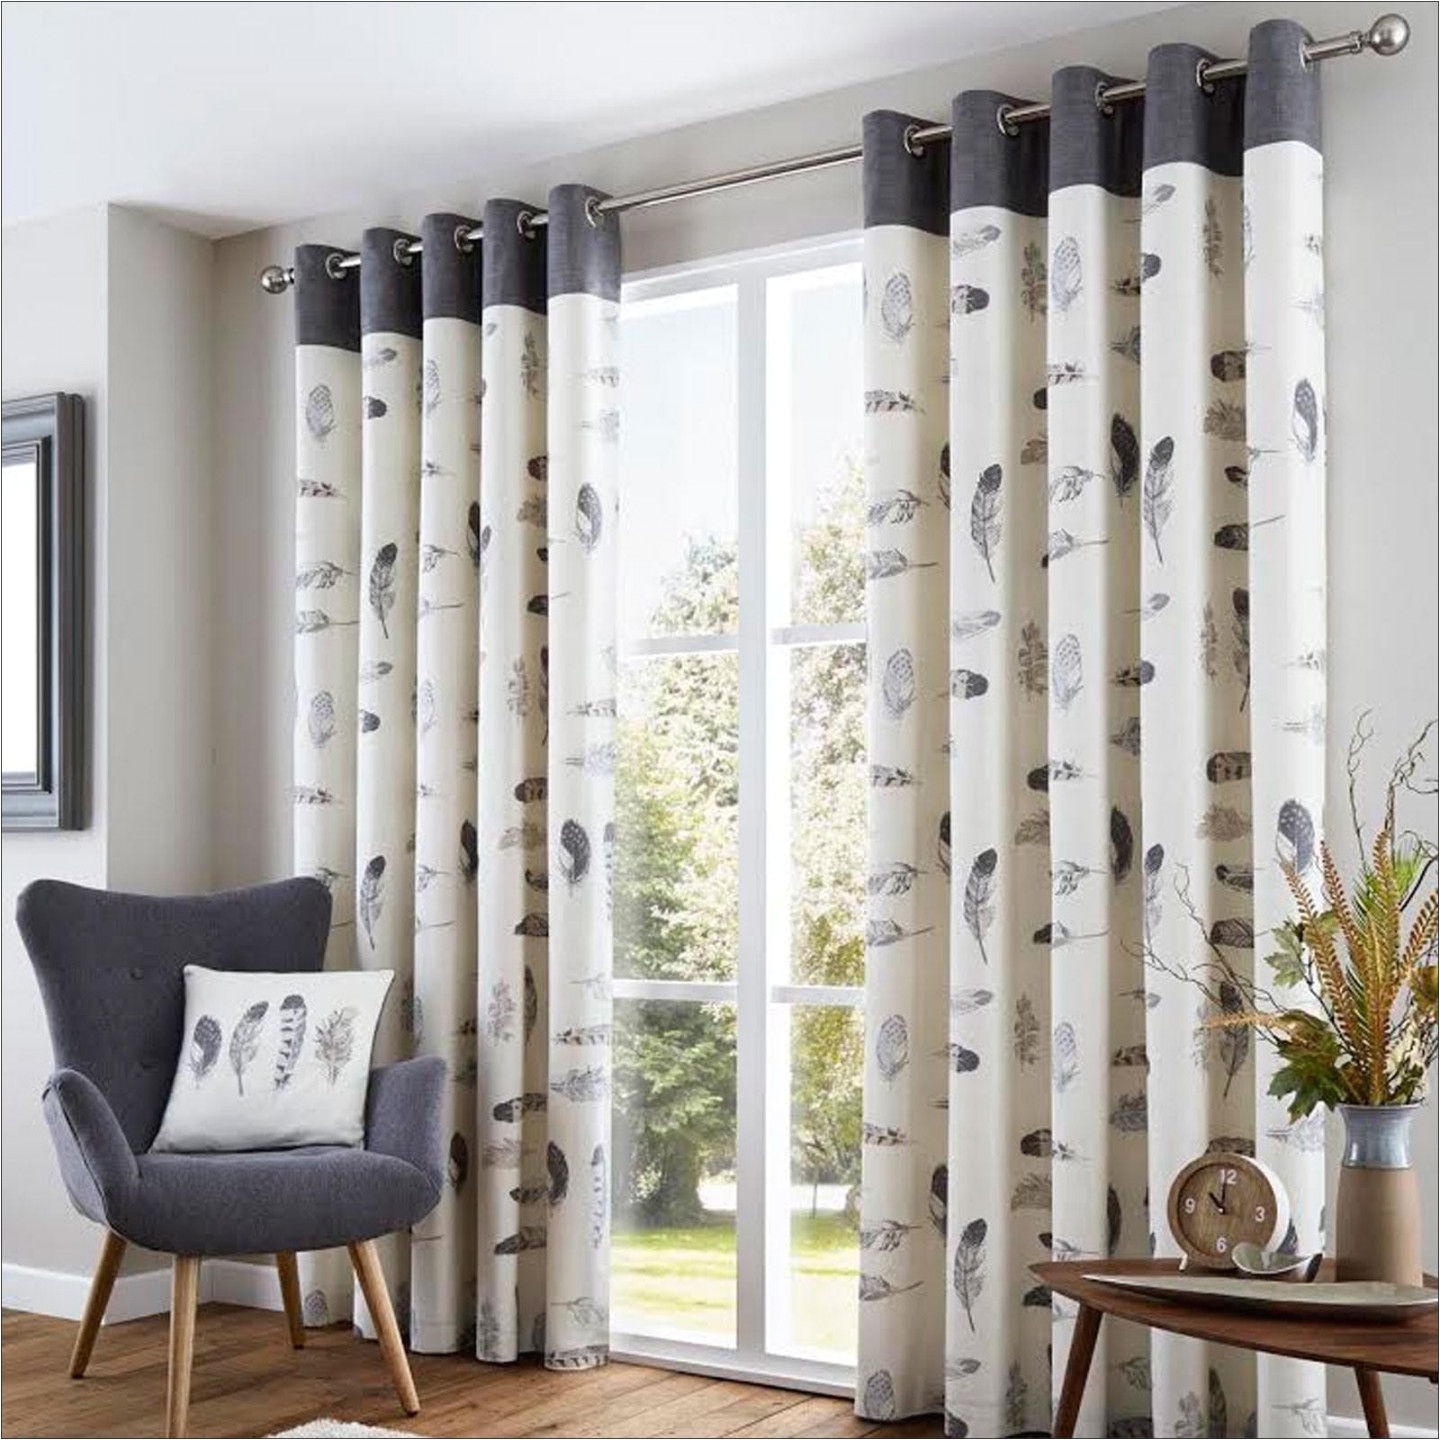 Curtain Ideas for Living Room Terrific Casual Dining Room Curtain Ideas In Living Room Traditional